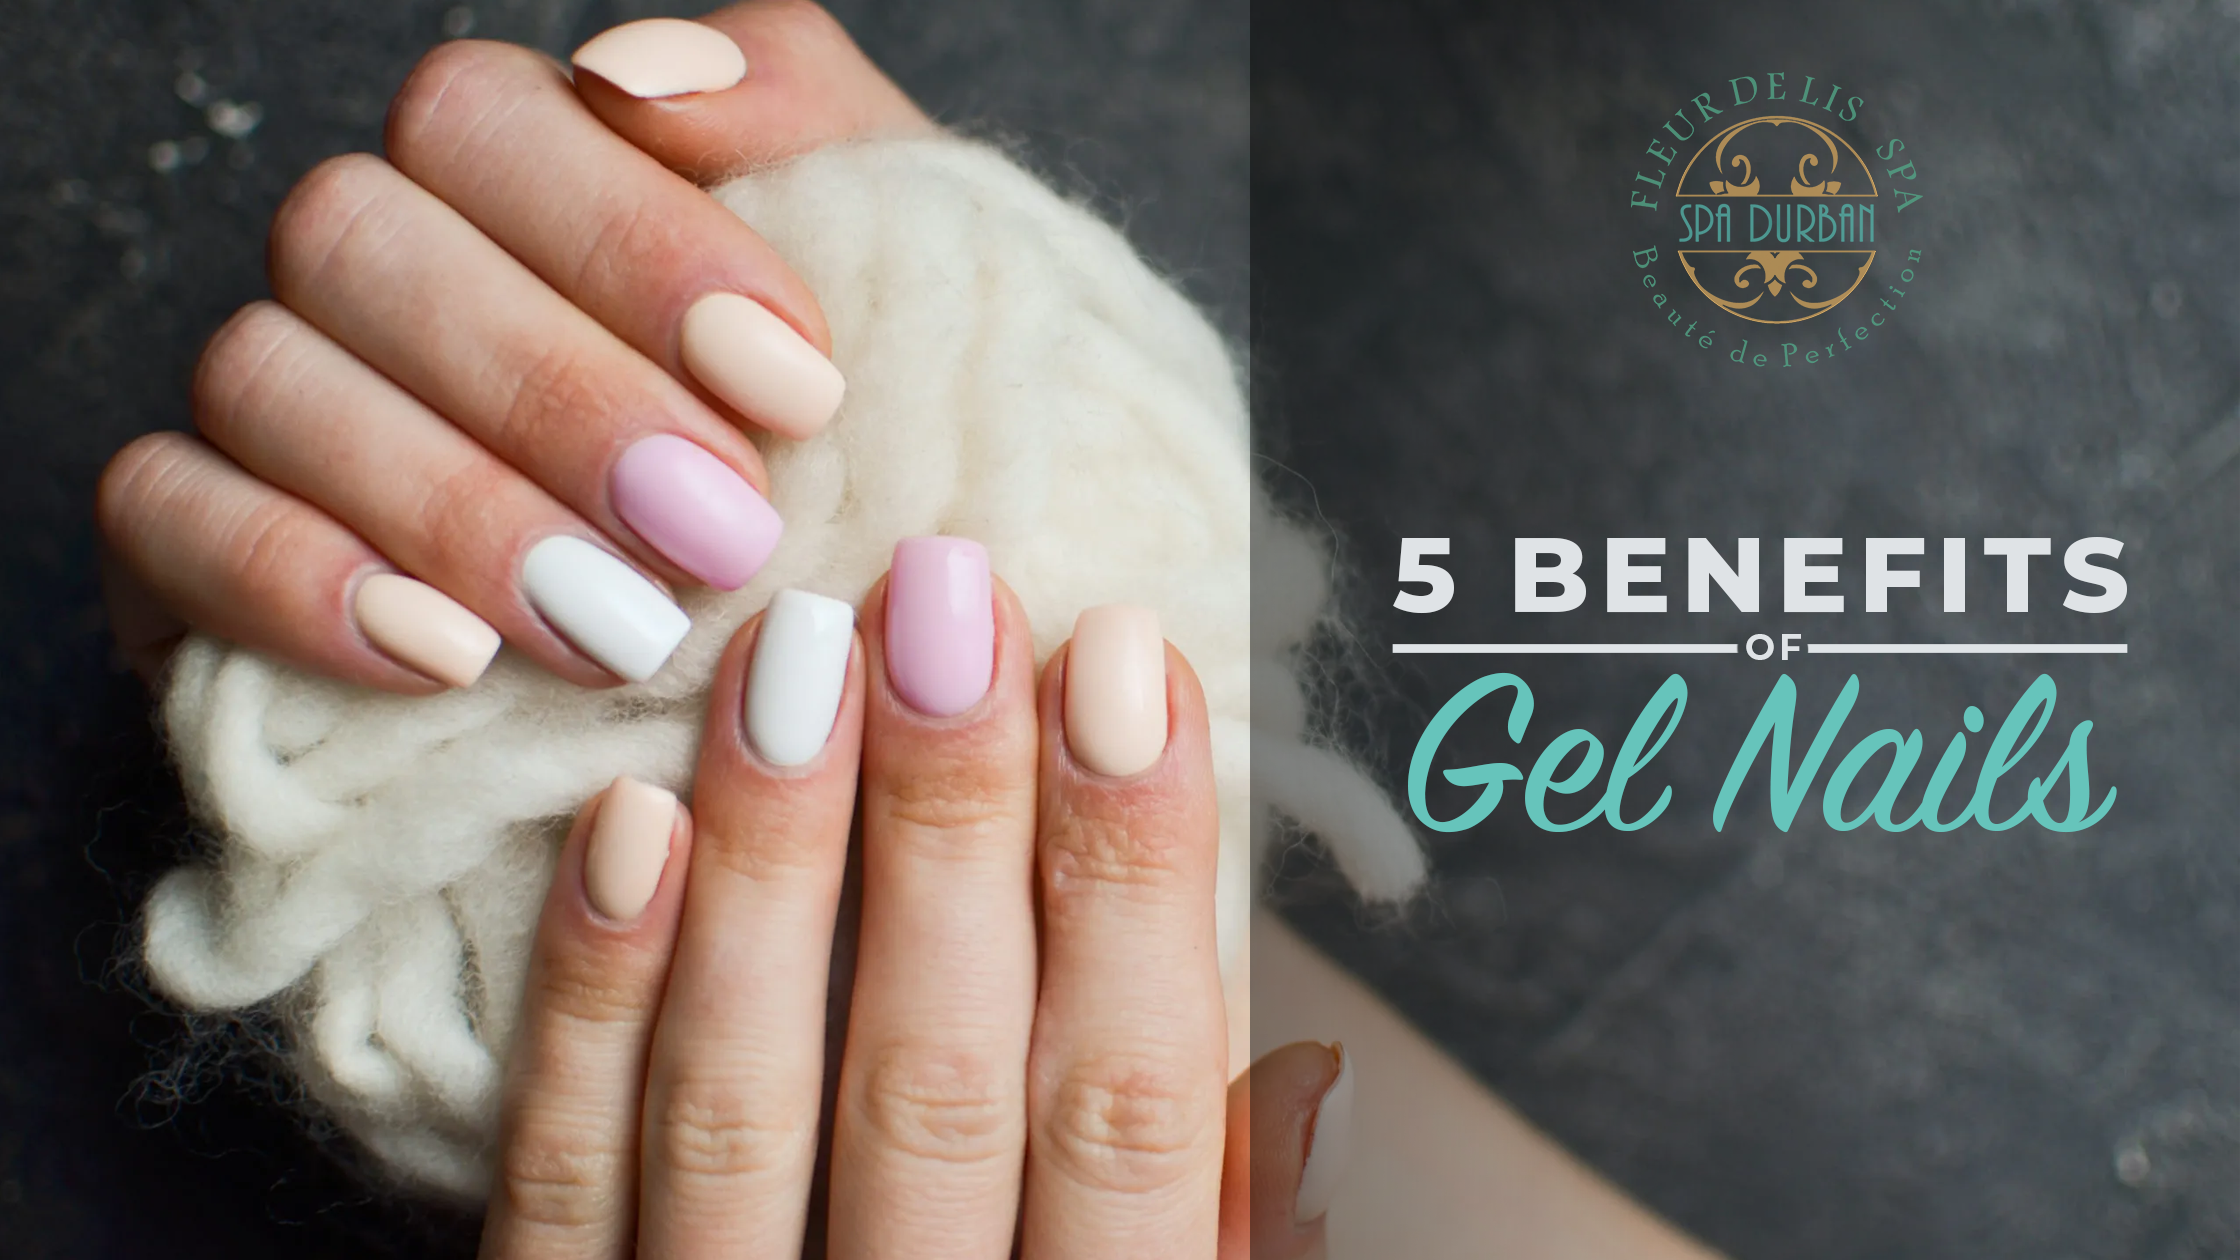 5 Benefits of Gel Nails – SpaDurban